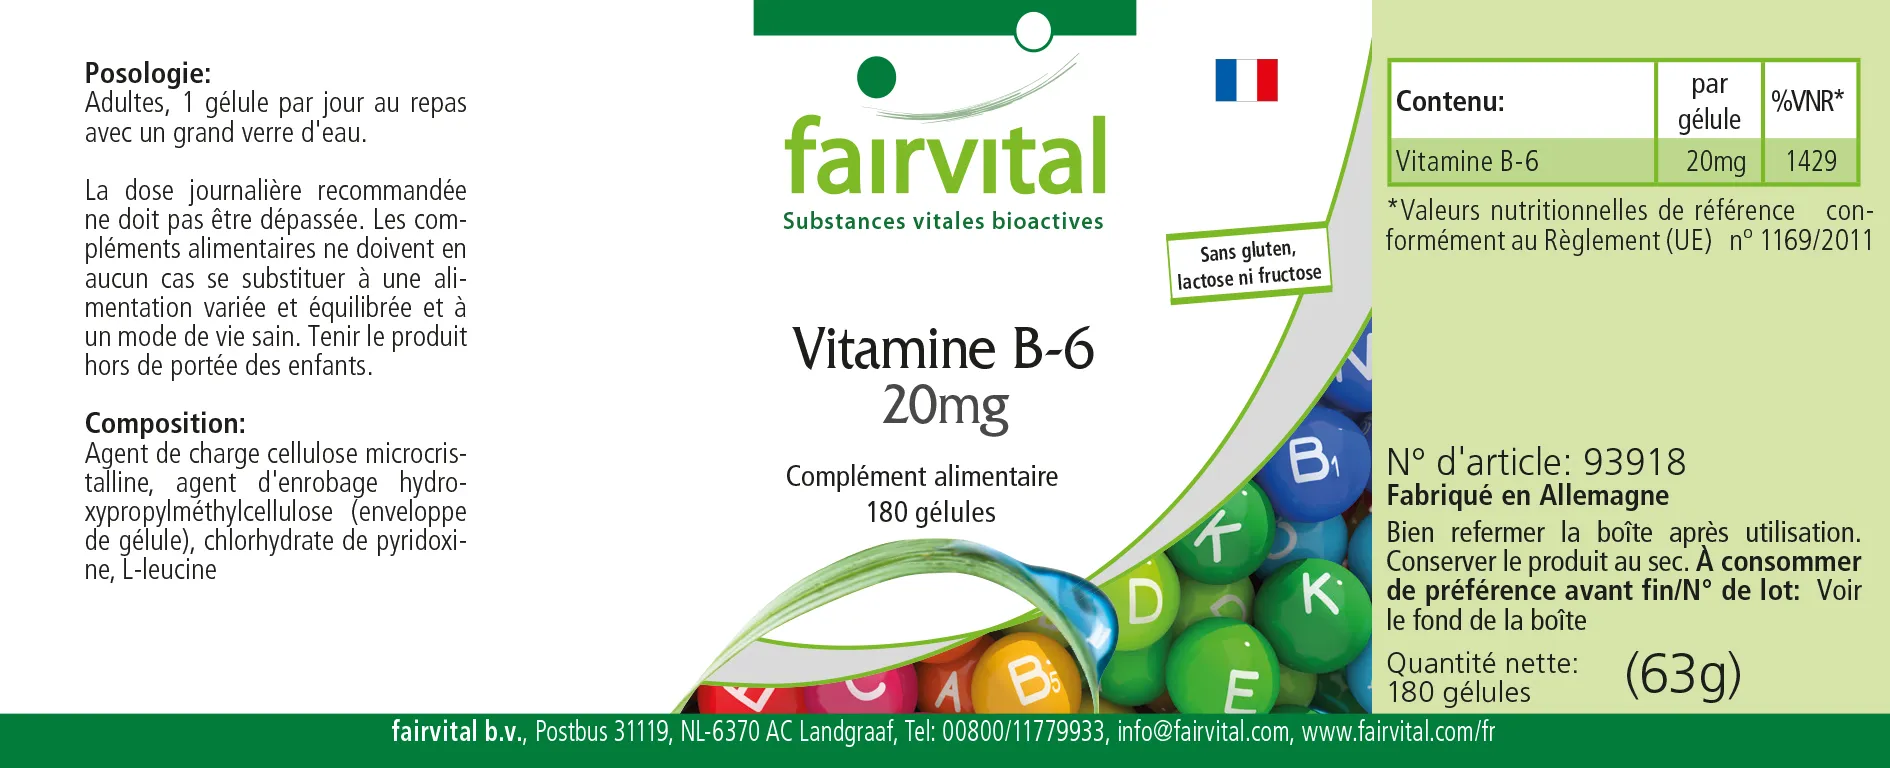 Vitamin B-6 20mg - 180 capsules